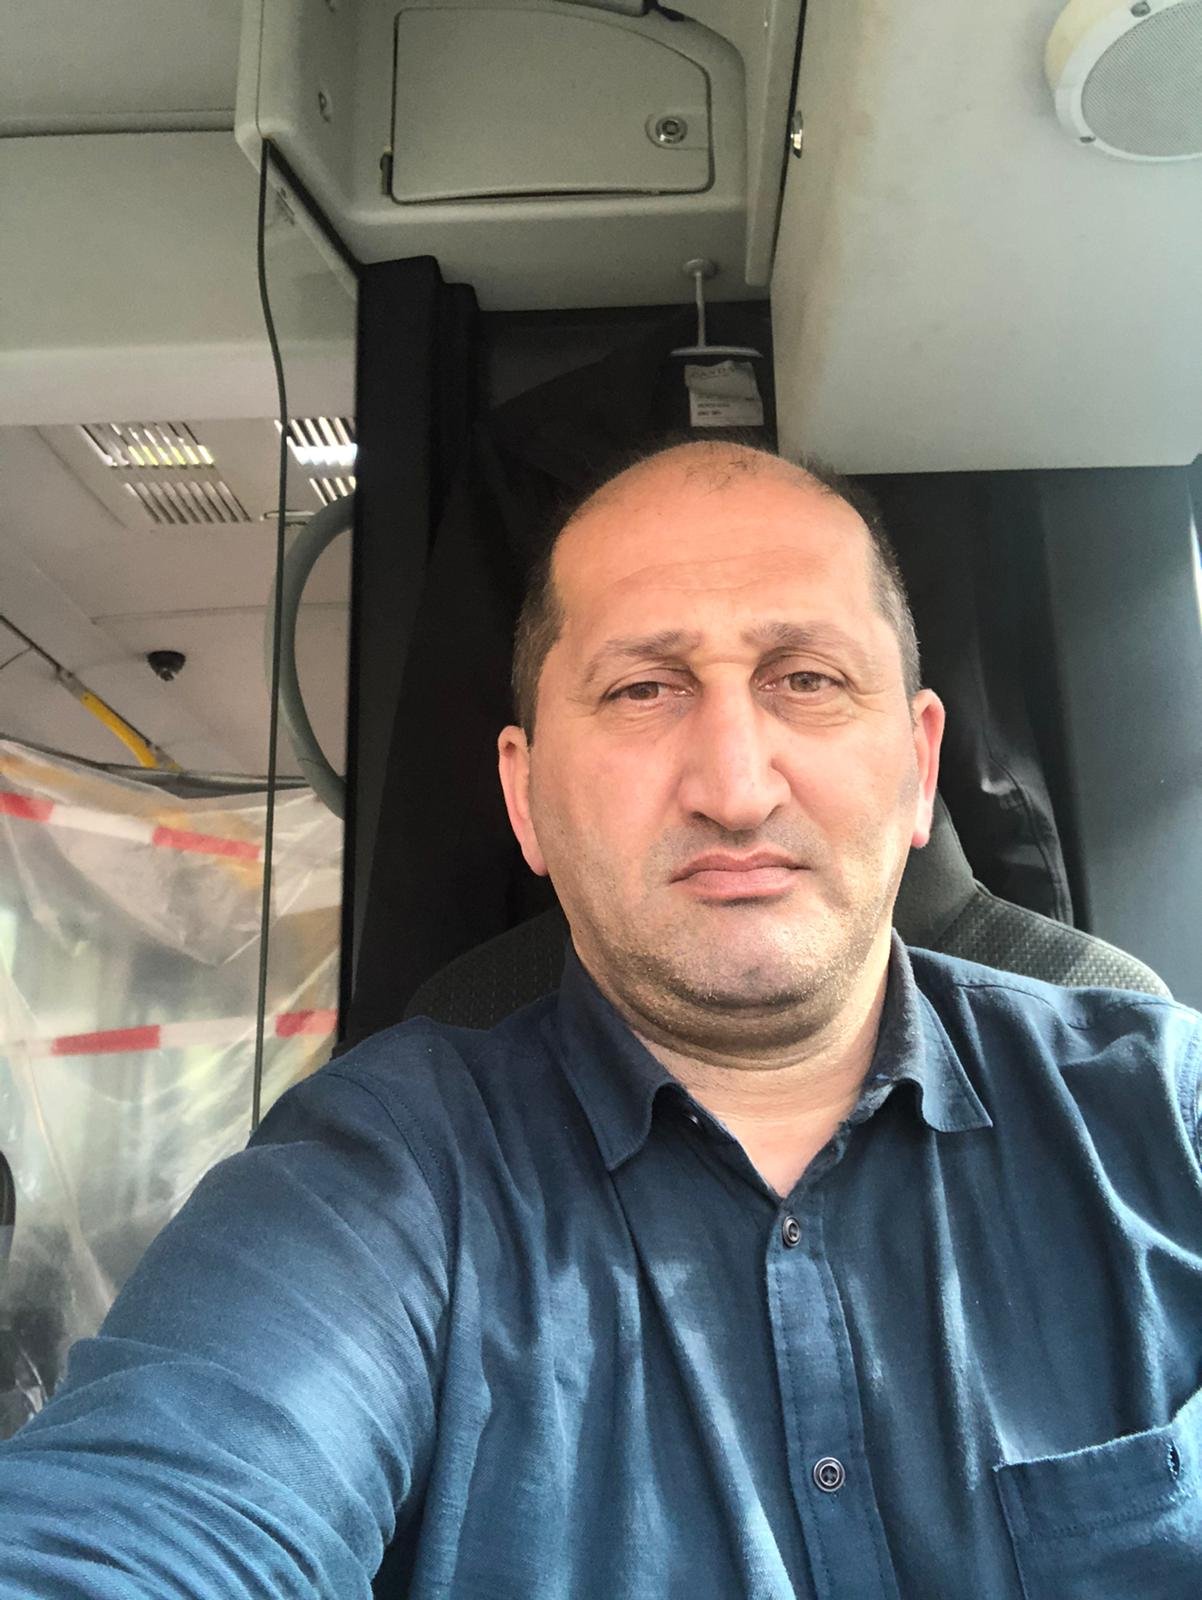 Elman, Aserbaidschan, Busfahrer (c) Fluchtpunkt Kürten